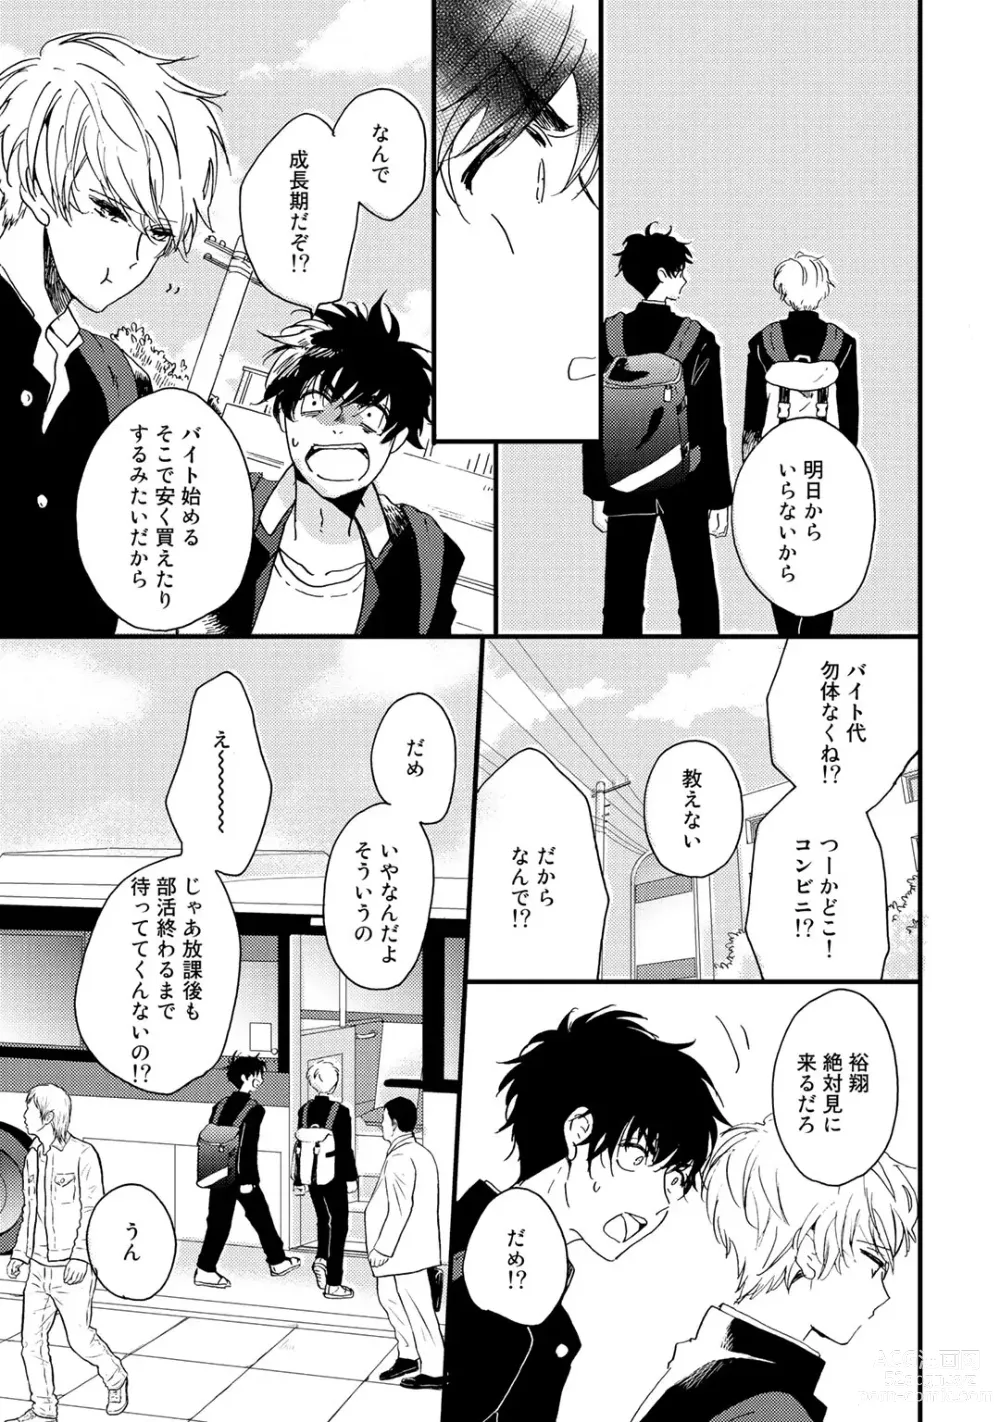 Page 11 of manga Hatsukoi Escape